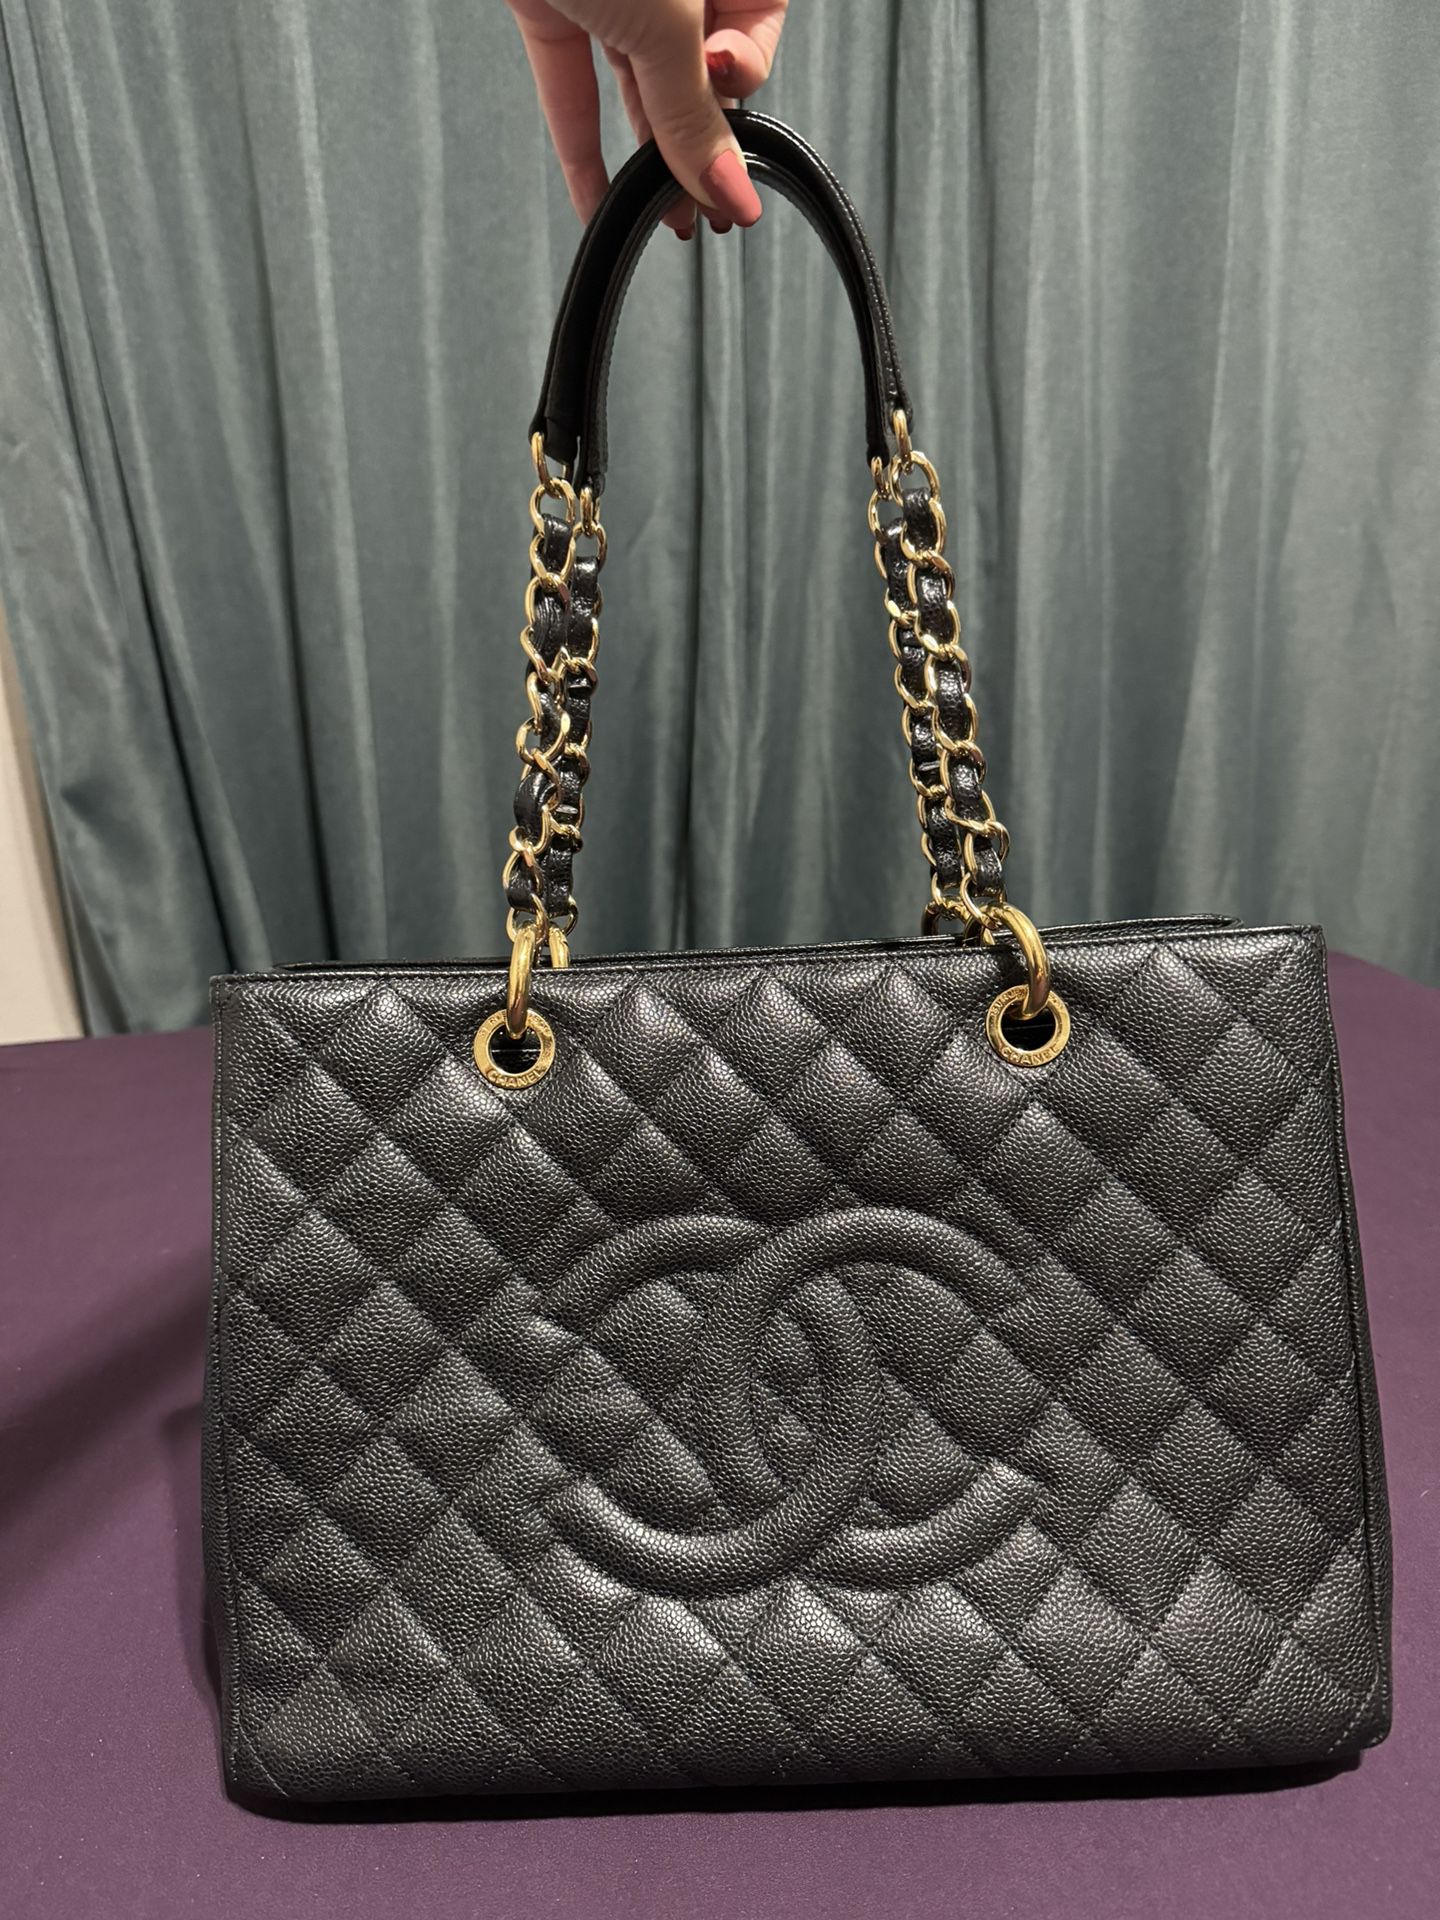 Chanel Gst Bag